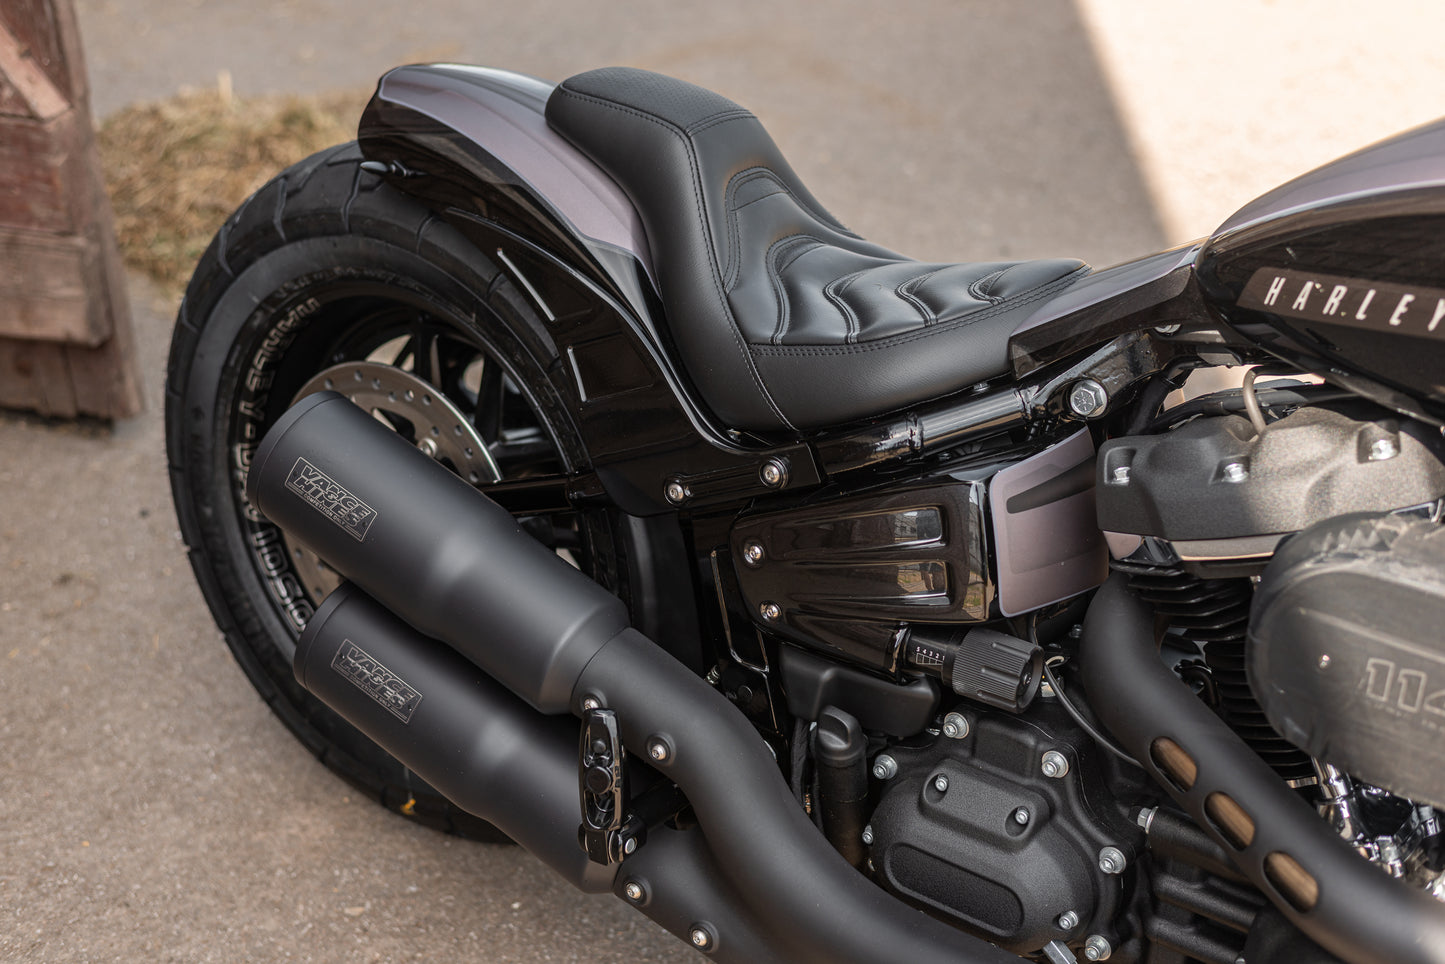 Zoomed Harley Davidson motorcycle with Killer Custom "Bobbstr" rear fender in a neutral environment